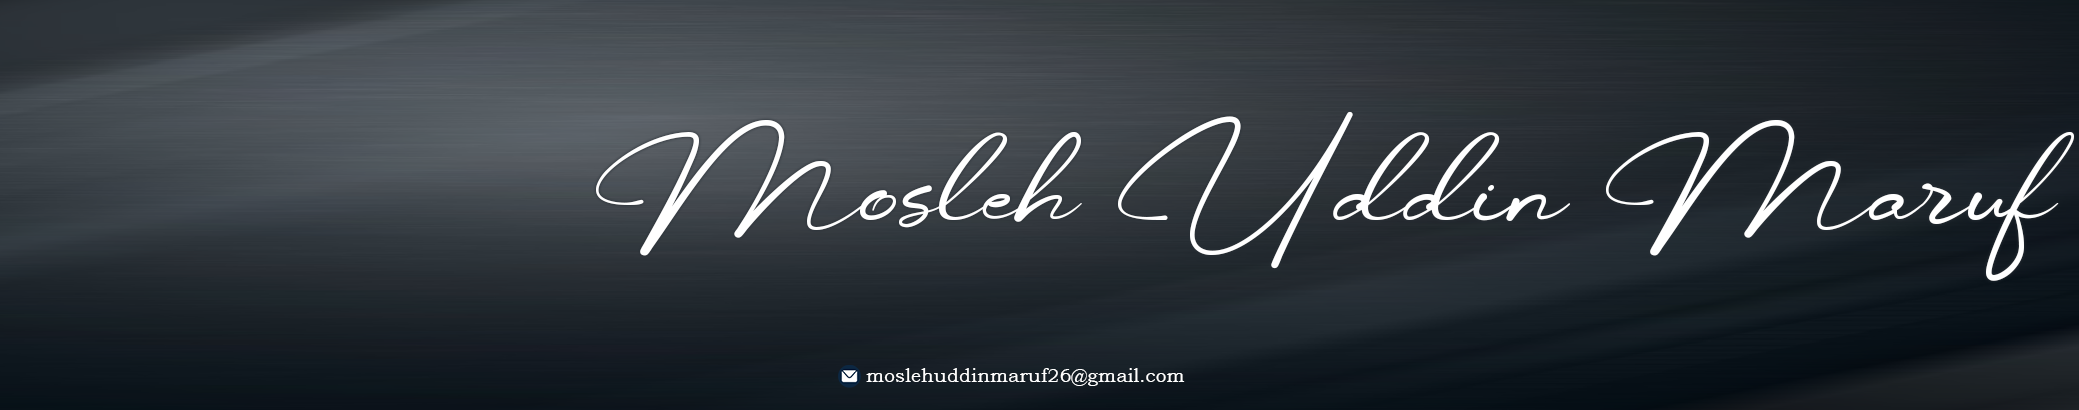 Profielbanner van Mosleh uddin Maruf26